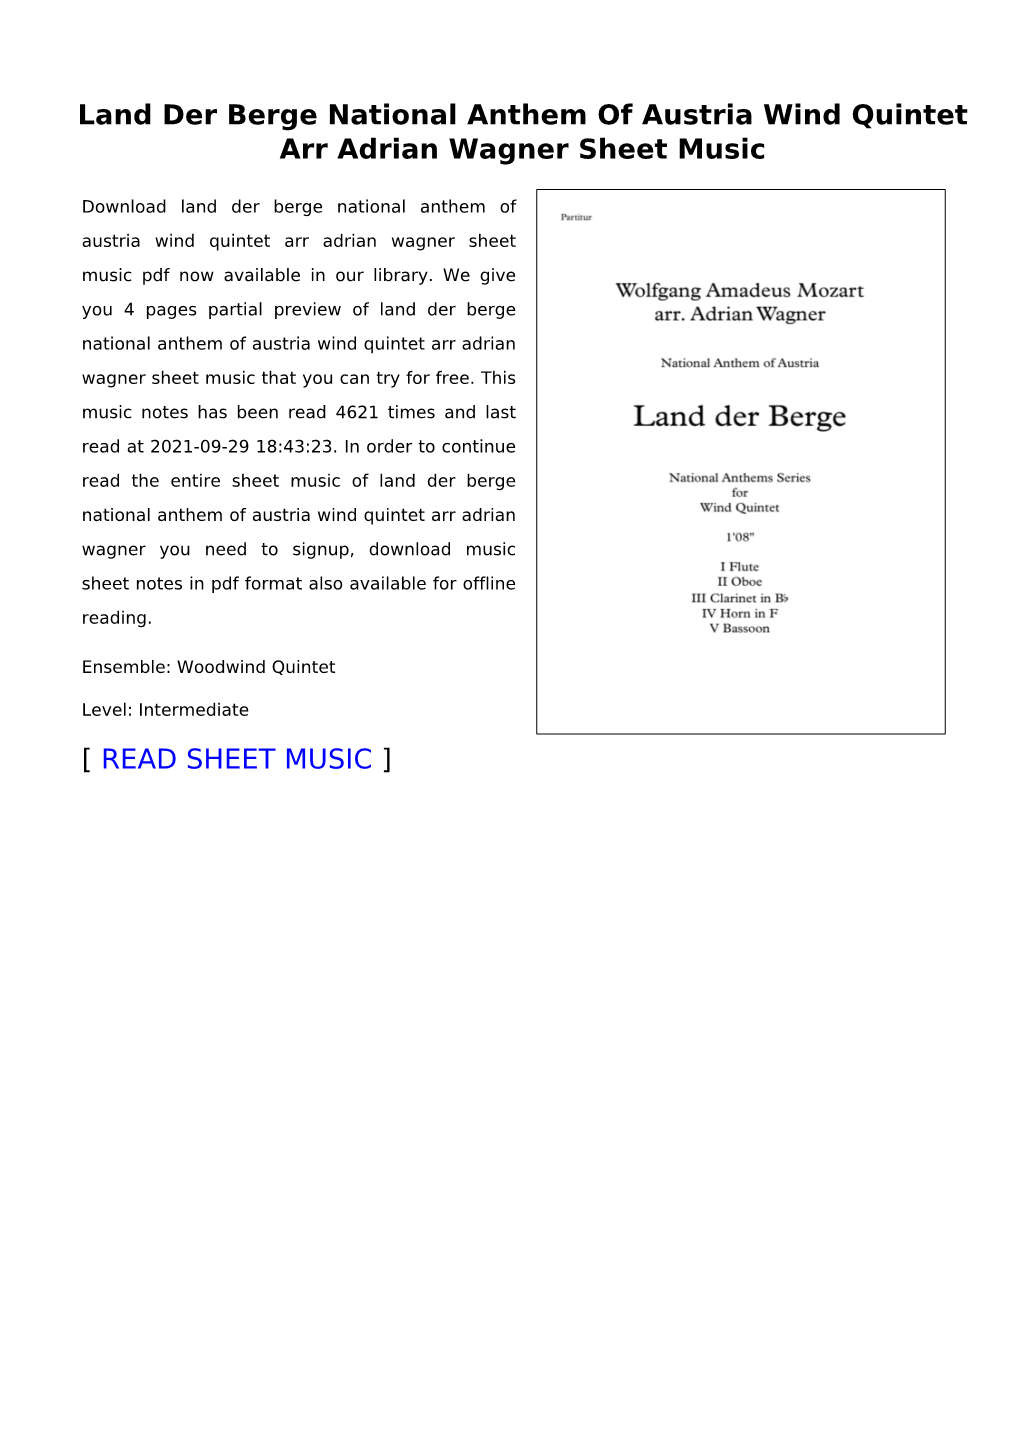 Land Der Berge National Anthem of Austria Wind Quintet Arr Adrian Wagner Sheet Music